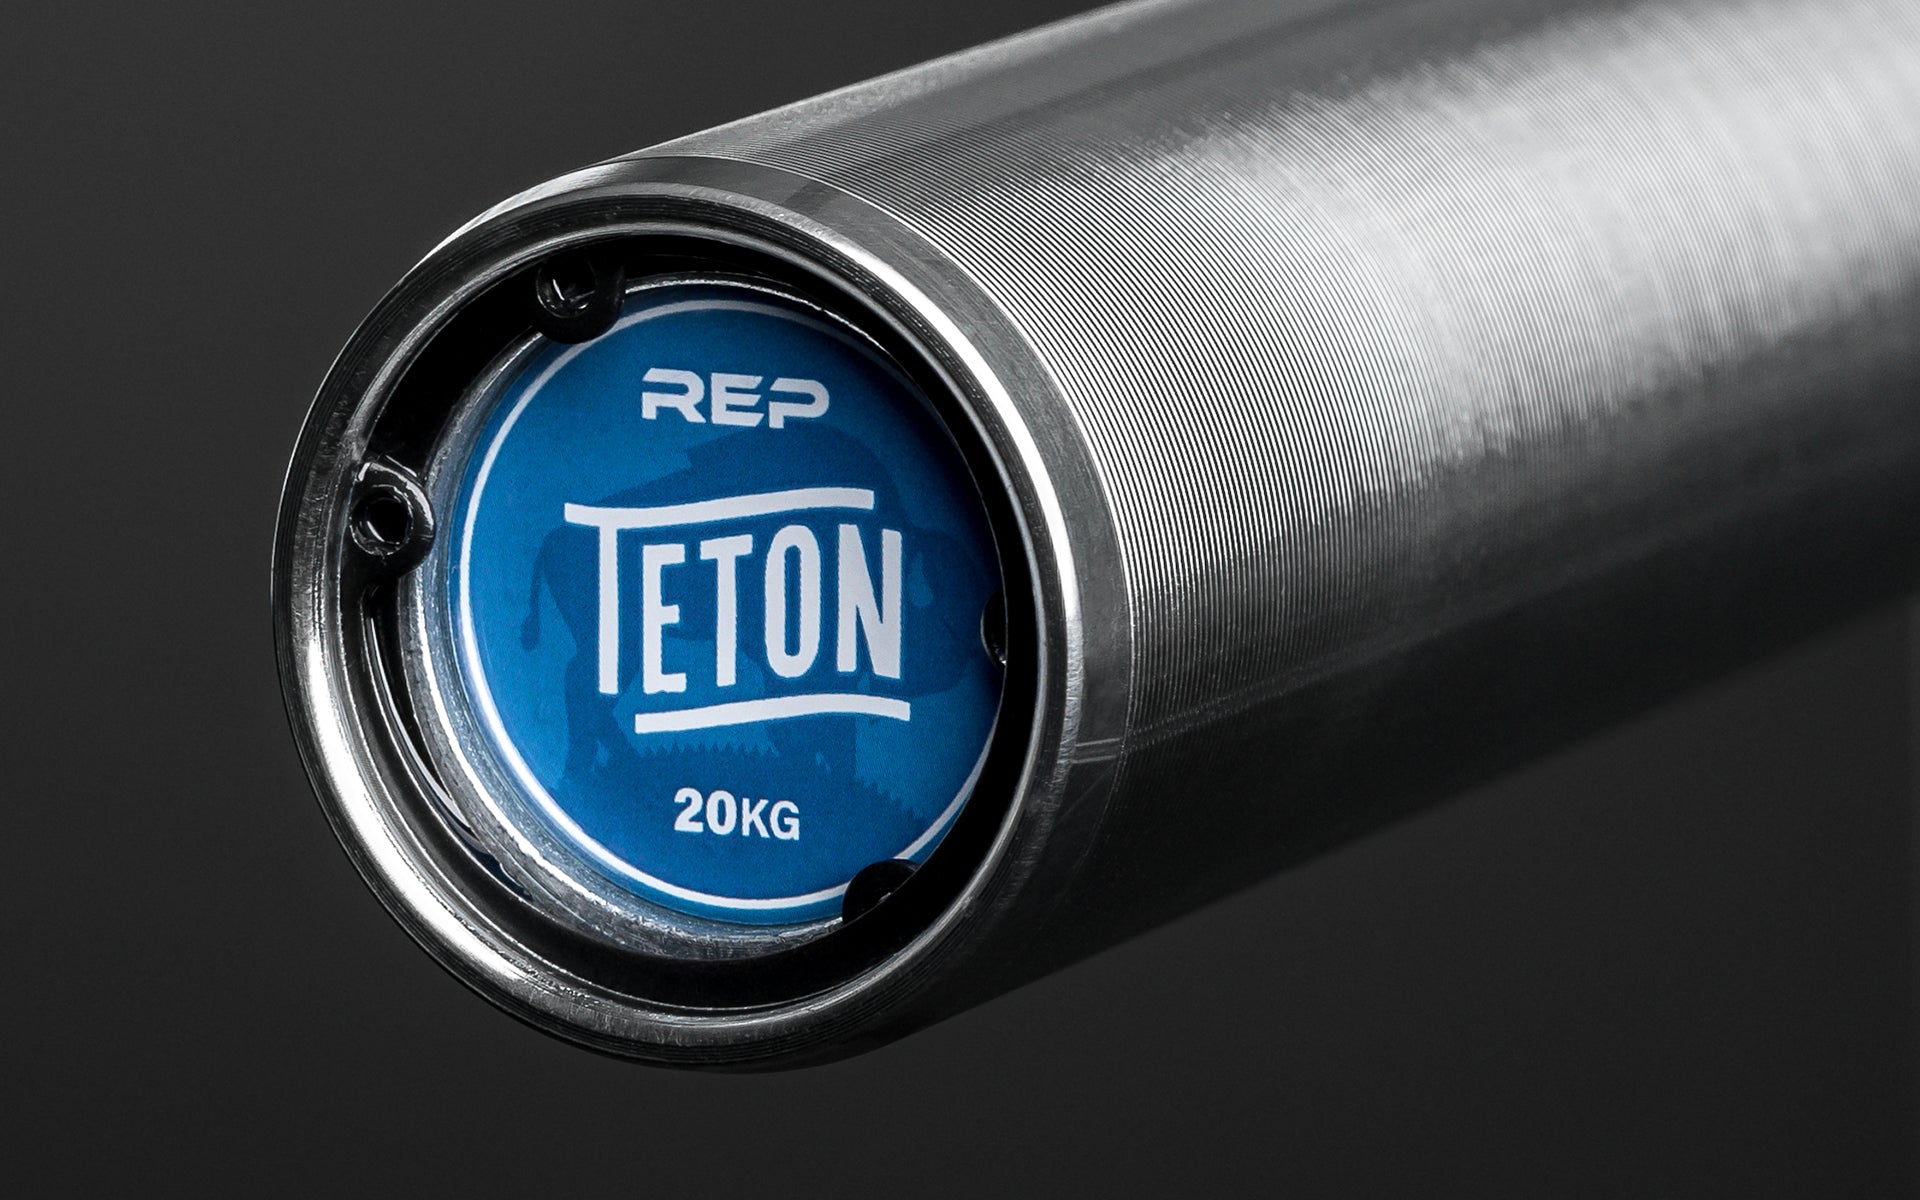 Close-up view of the endcap sticker of a REP Teton Training Bar - 20kg.